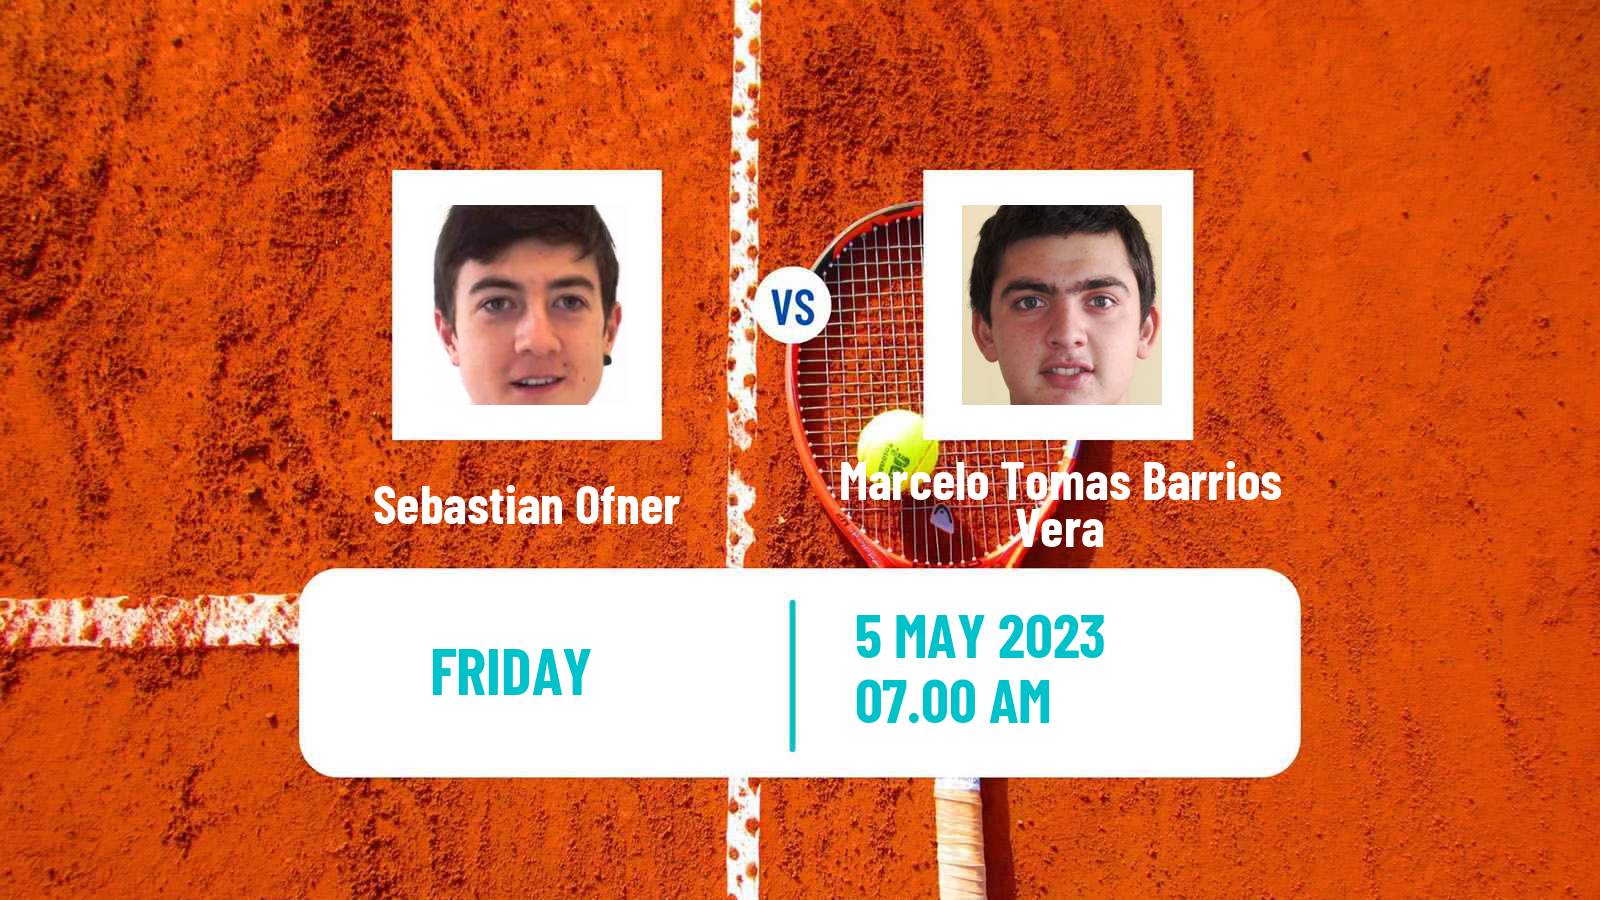 Tennis ATP Challenger Sebastian Ofner - Marcelo Tomas Barrios Vera